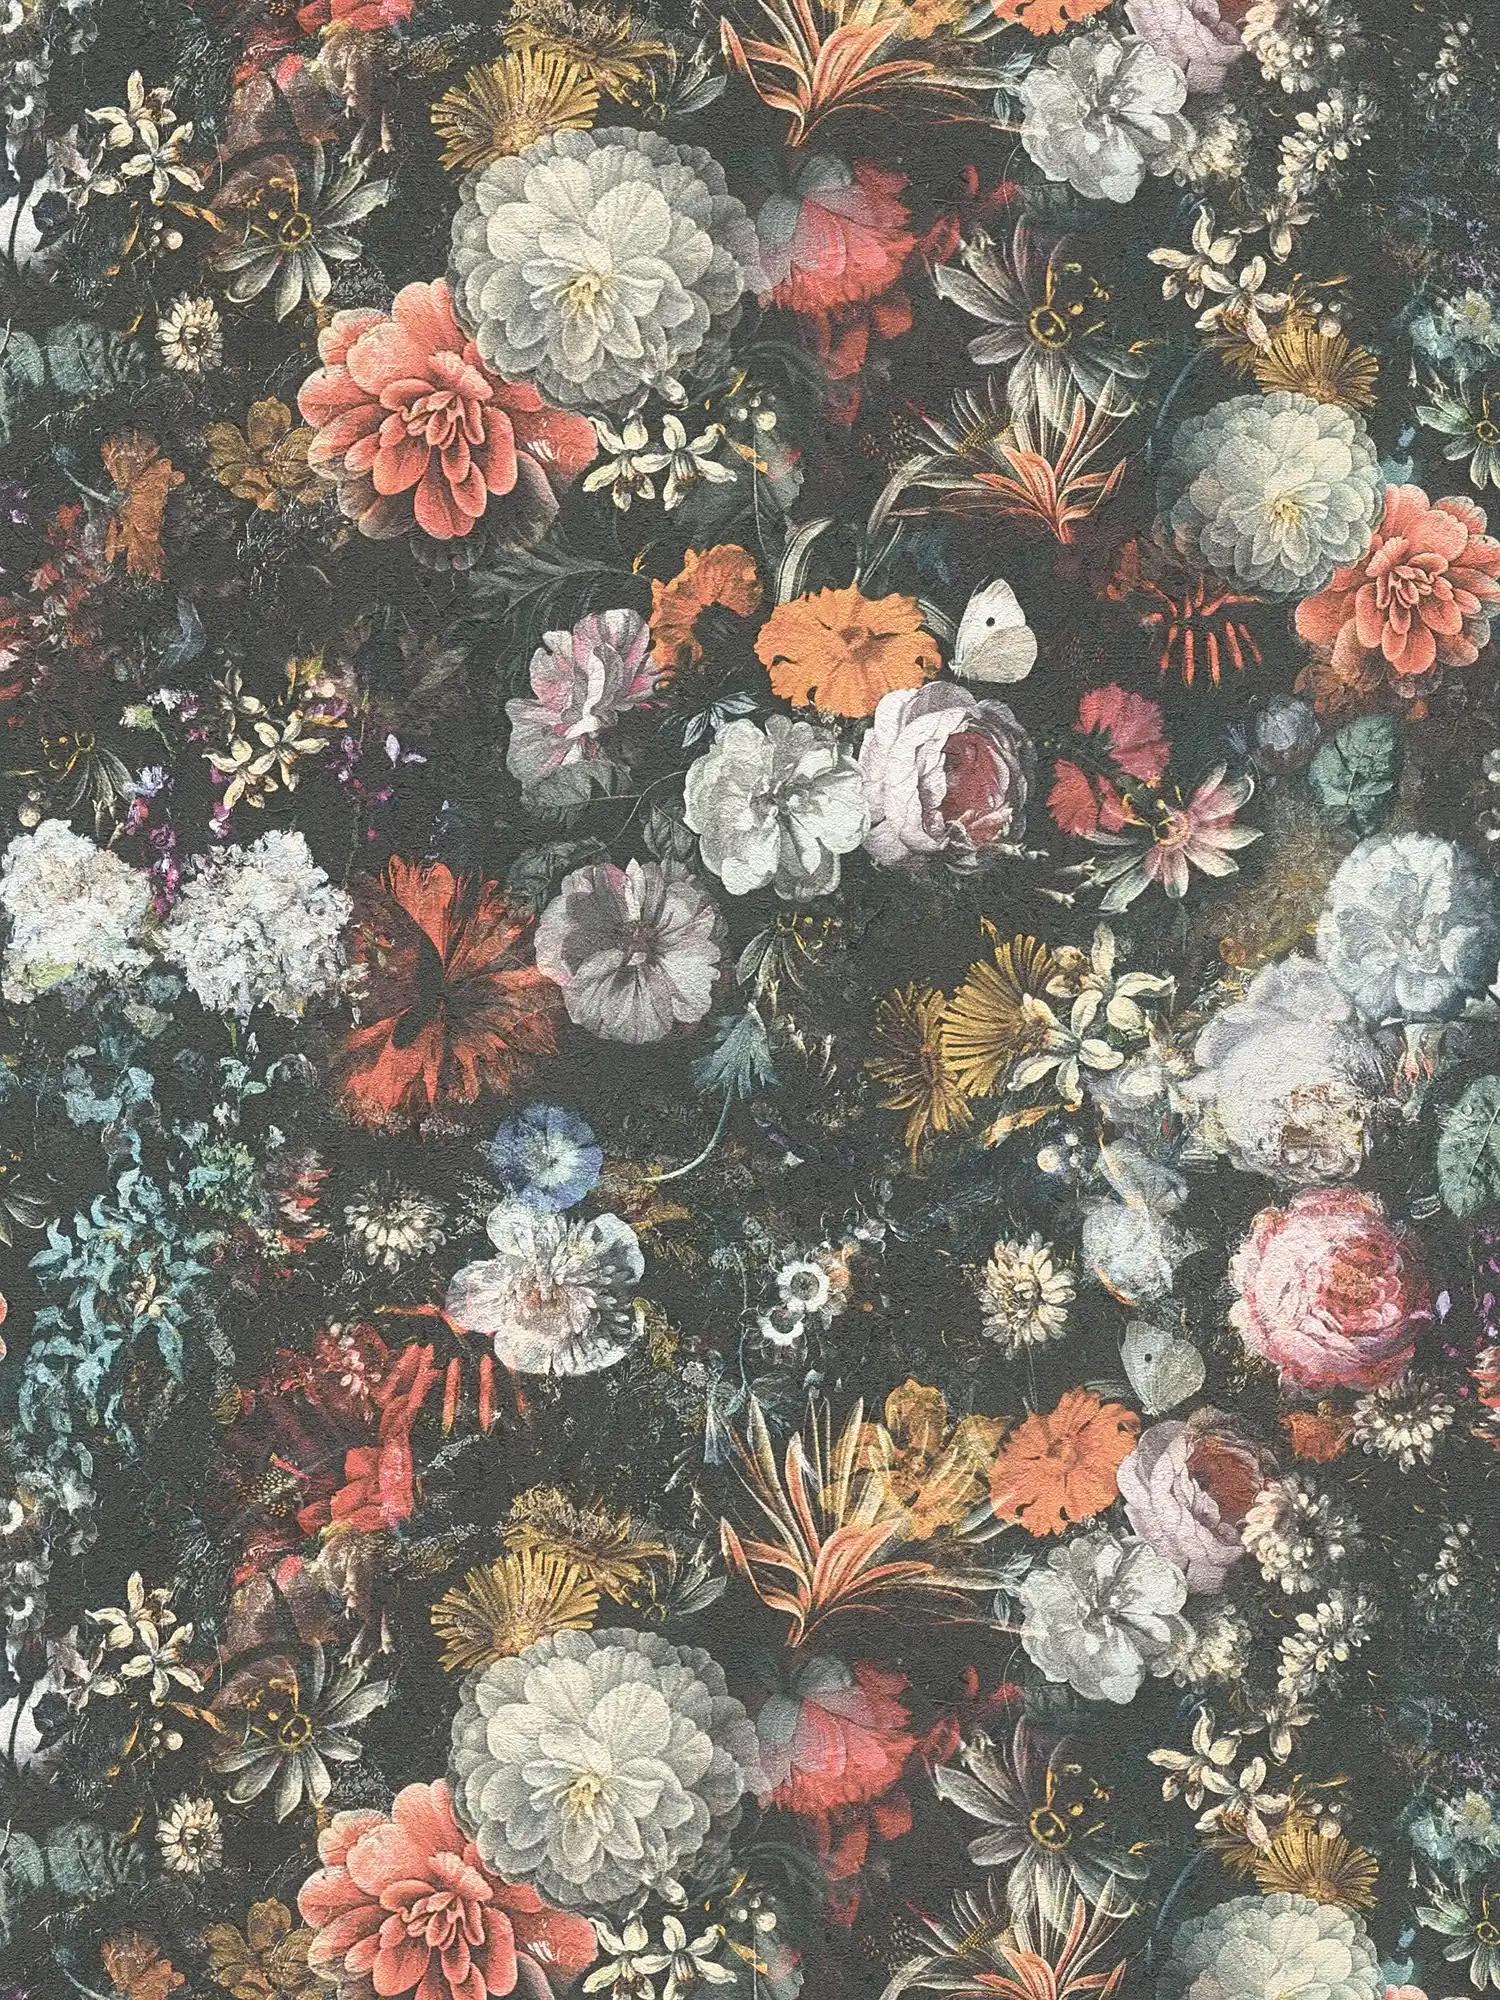         Flowers wallpaper vintage design with roses - colourful, grey, orange
    